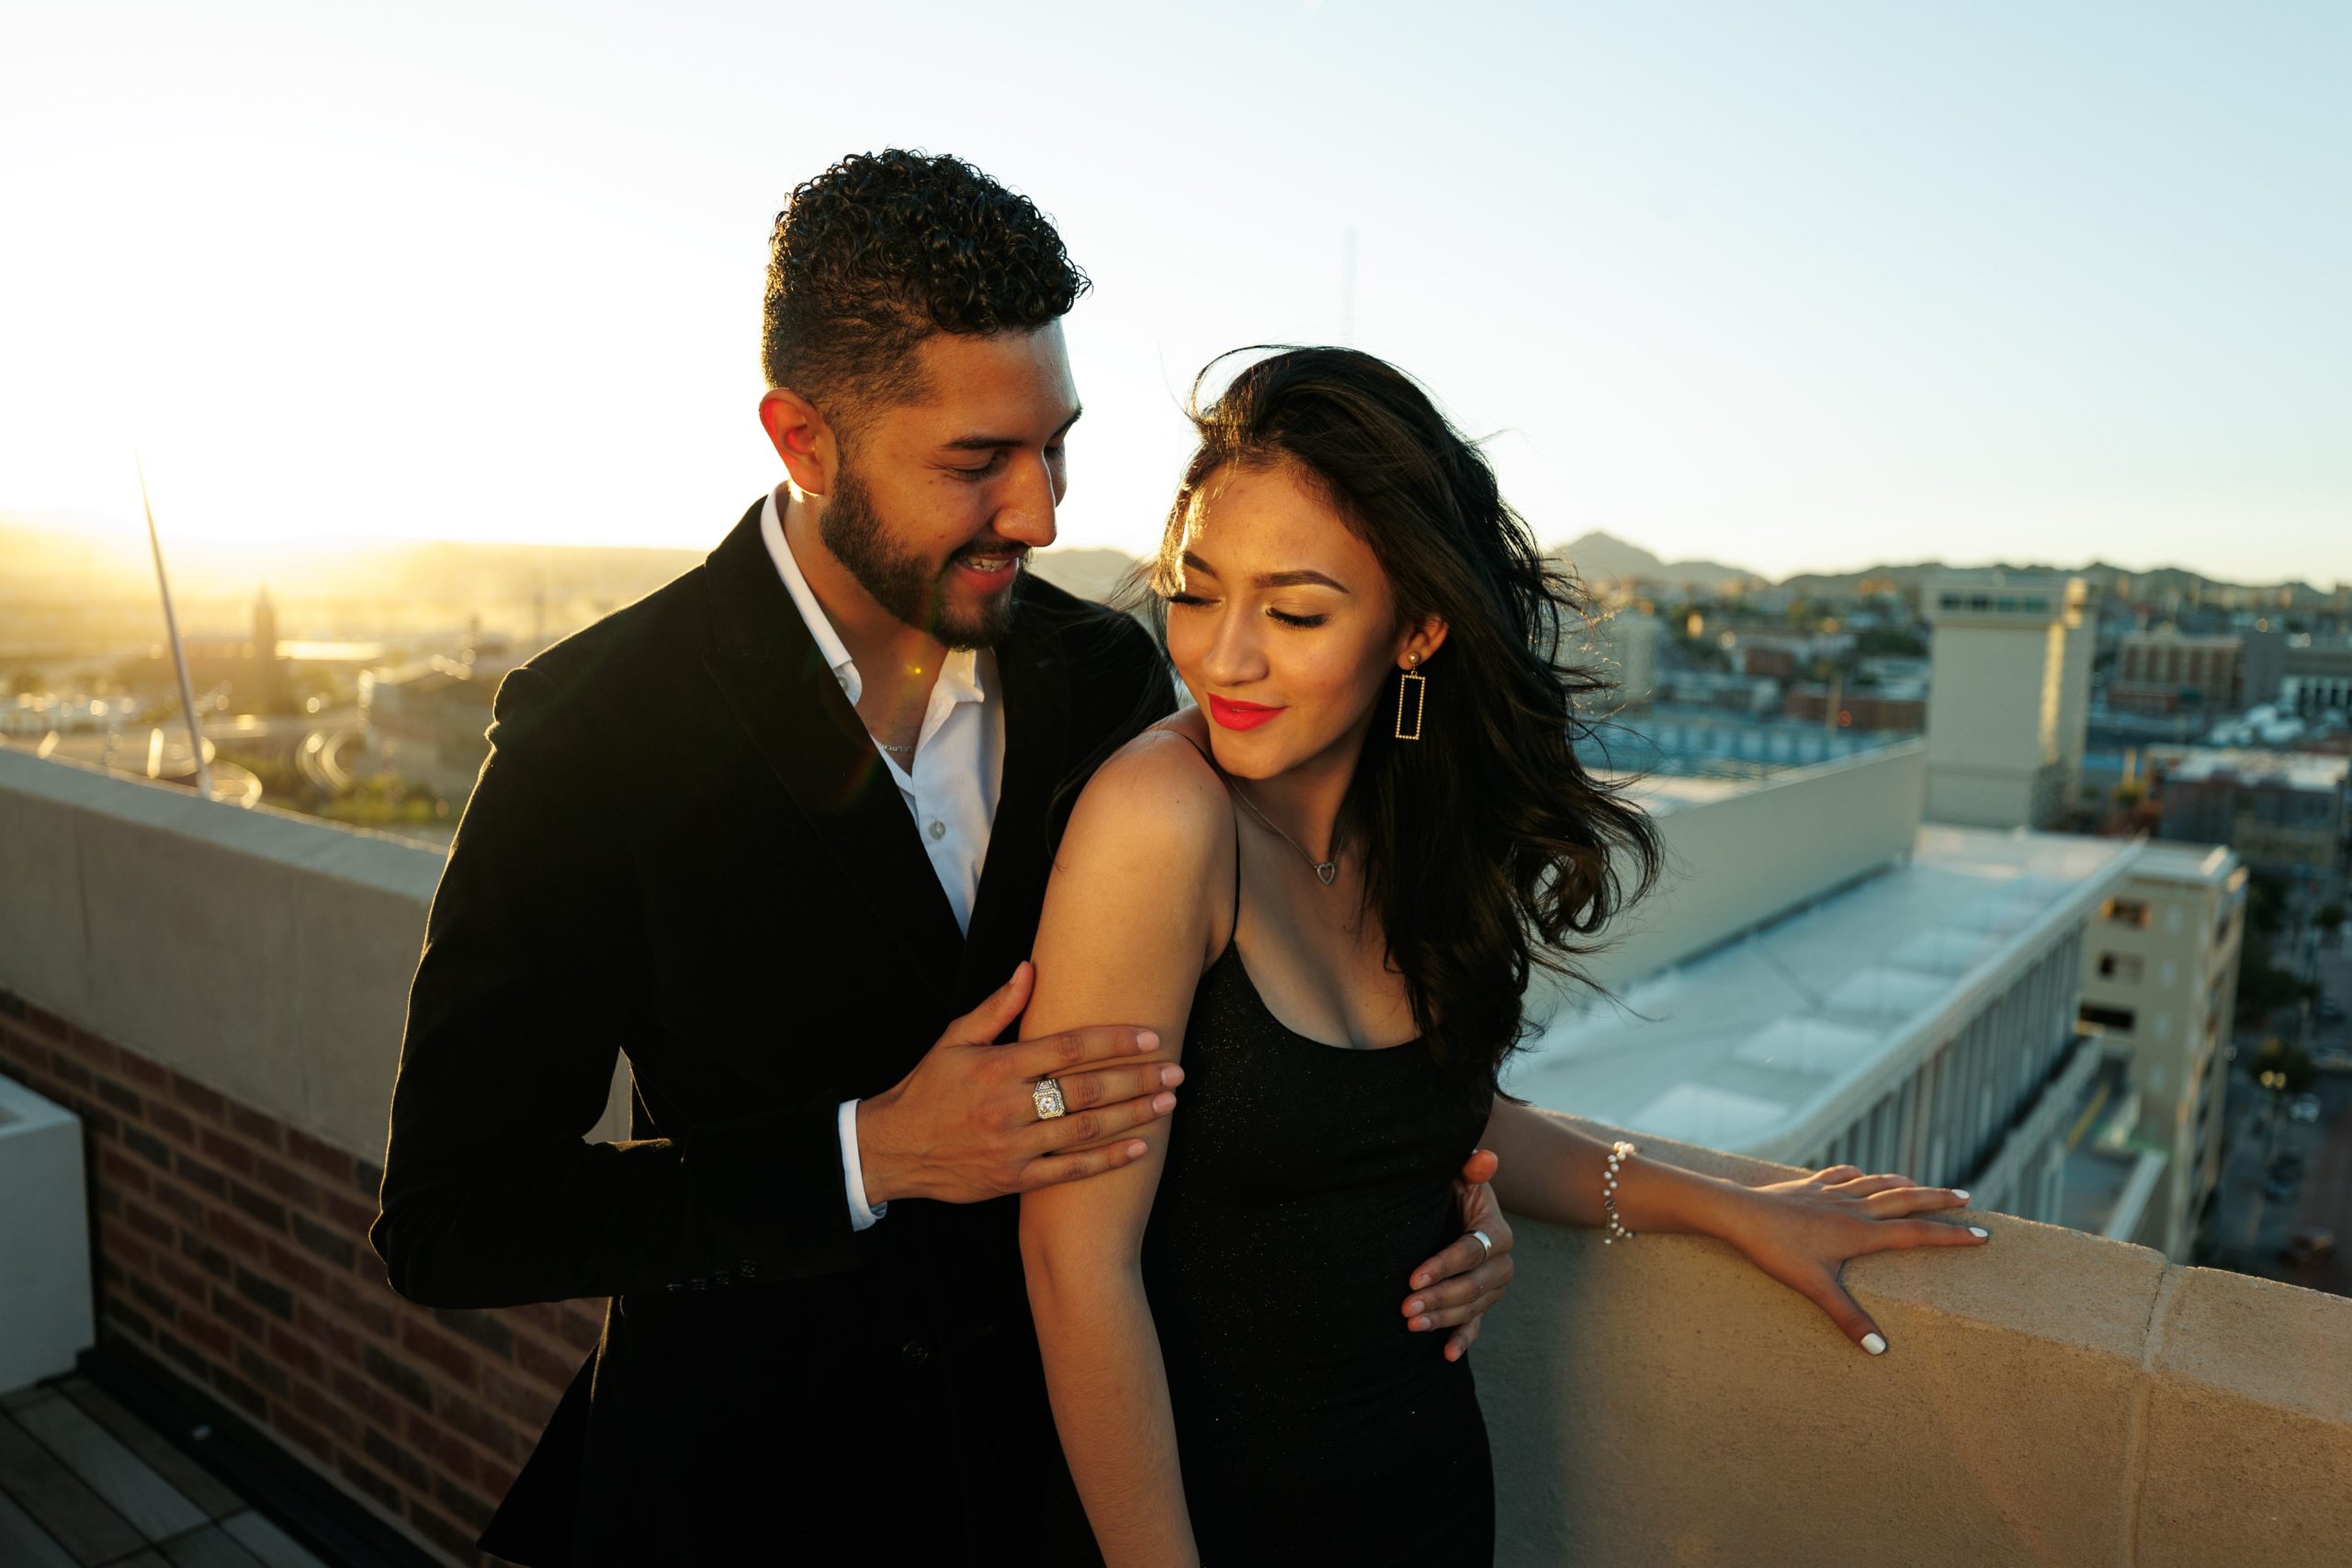 Engagement Photos in El Paso | The Plaza Hotel Pioneer Park